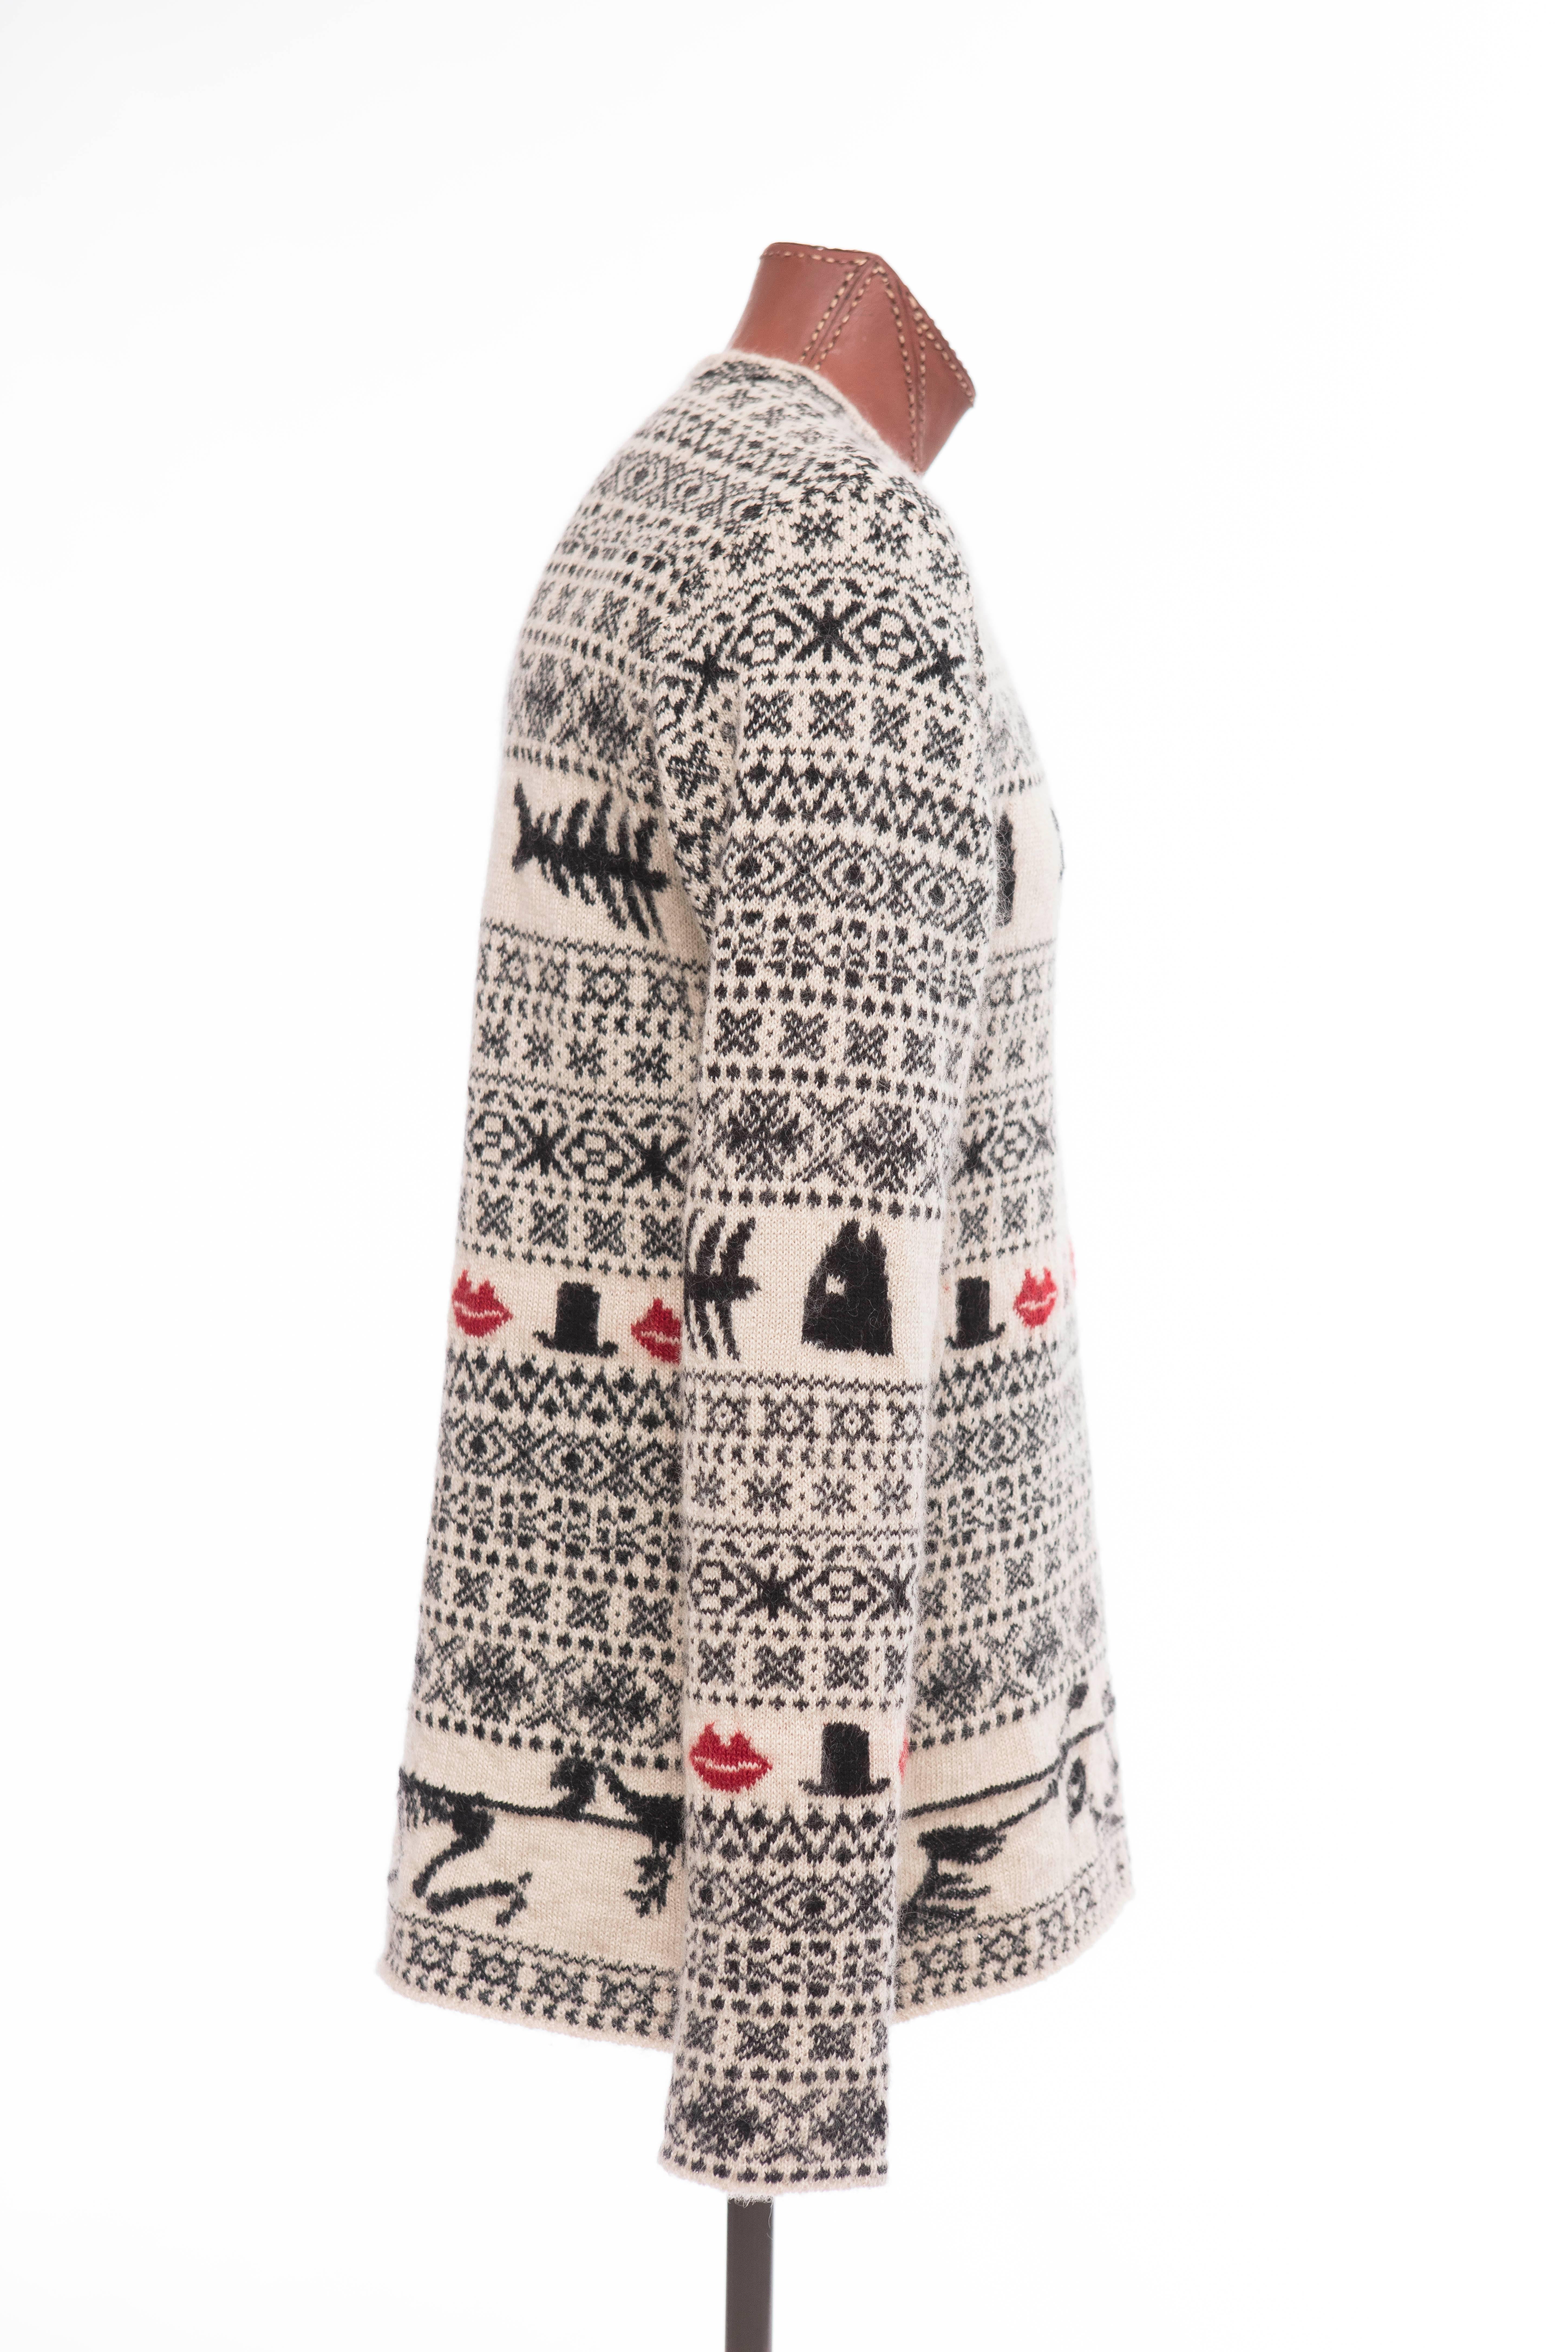 Yohji Yamamoto Men's Wool Lips Bones Top Hat Patterned Sweater, Fall 2011 3